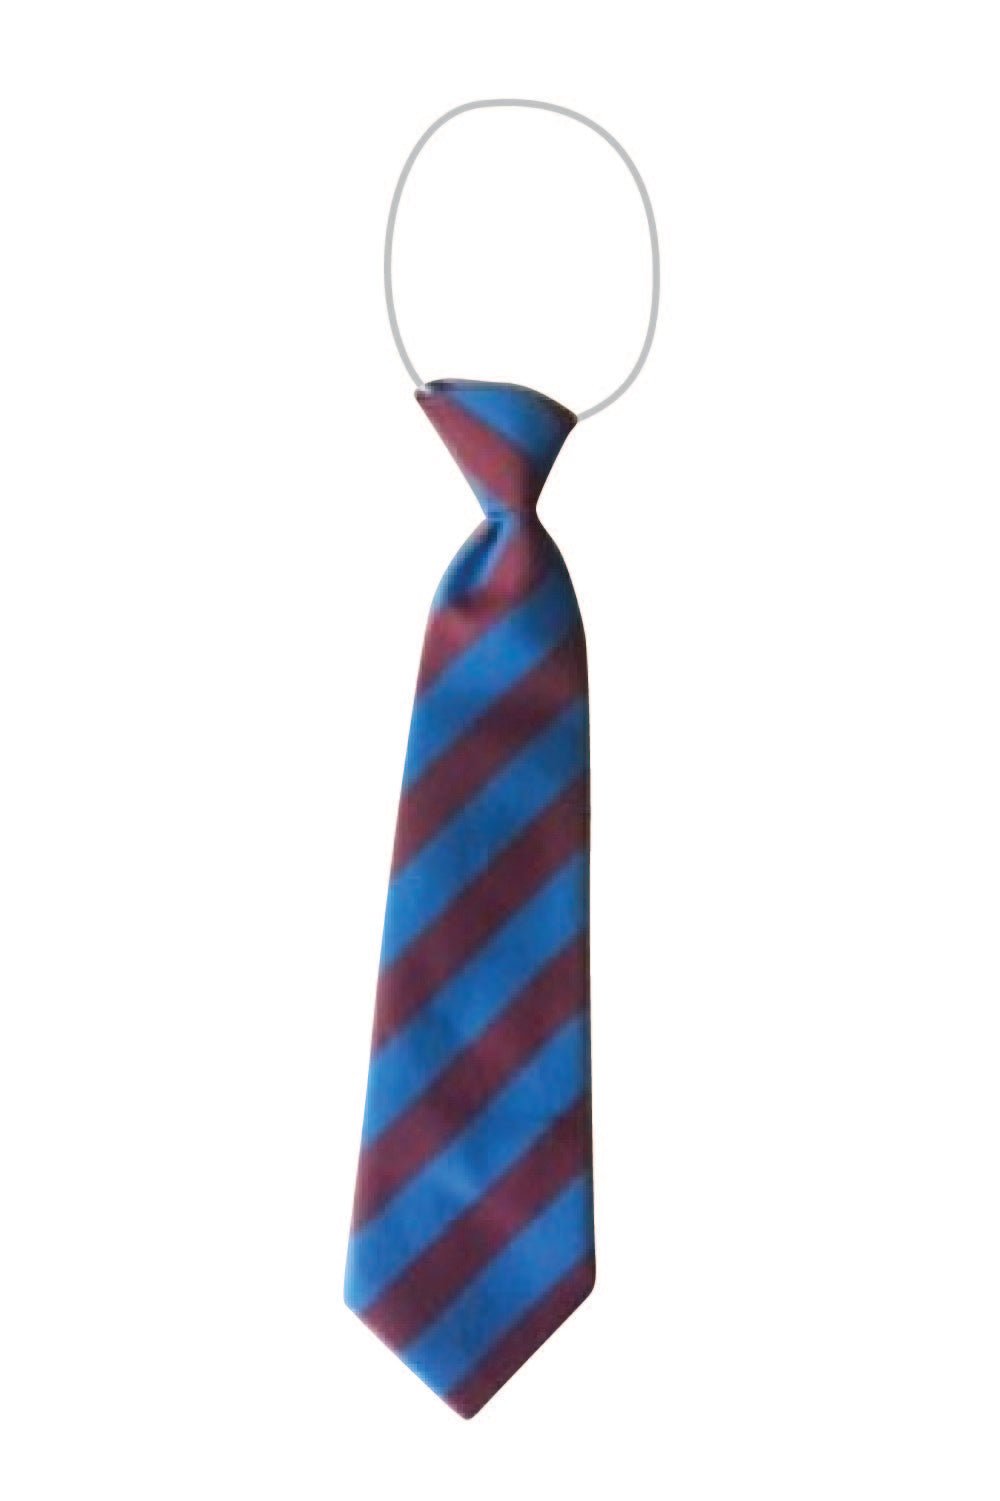 Laindon Park Elastic Tie - Uniformwise Schoolwear